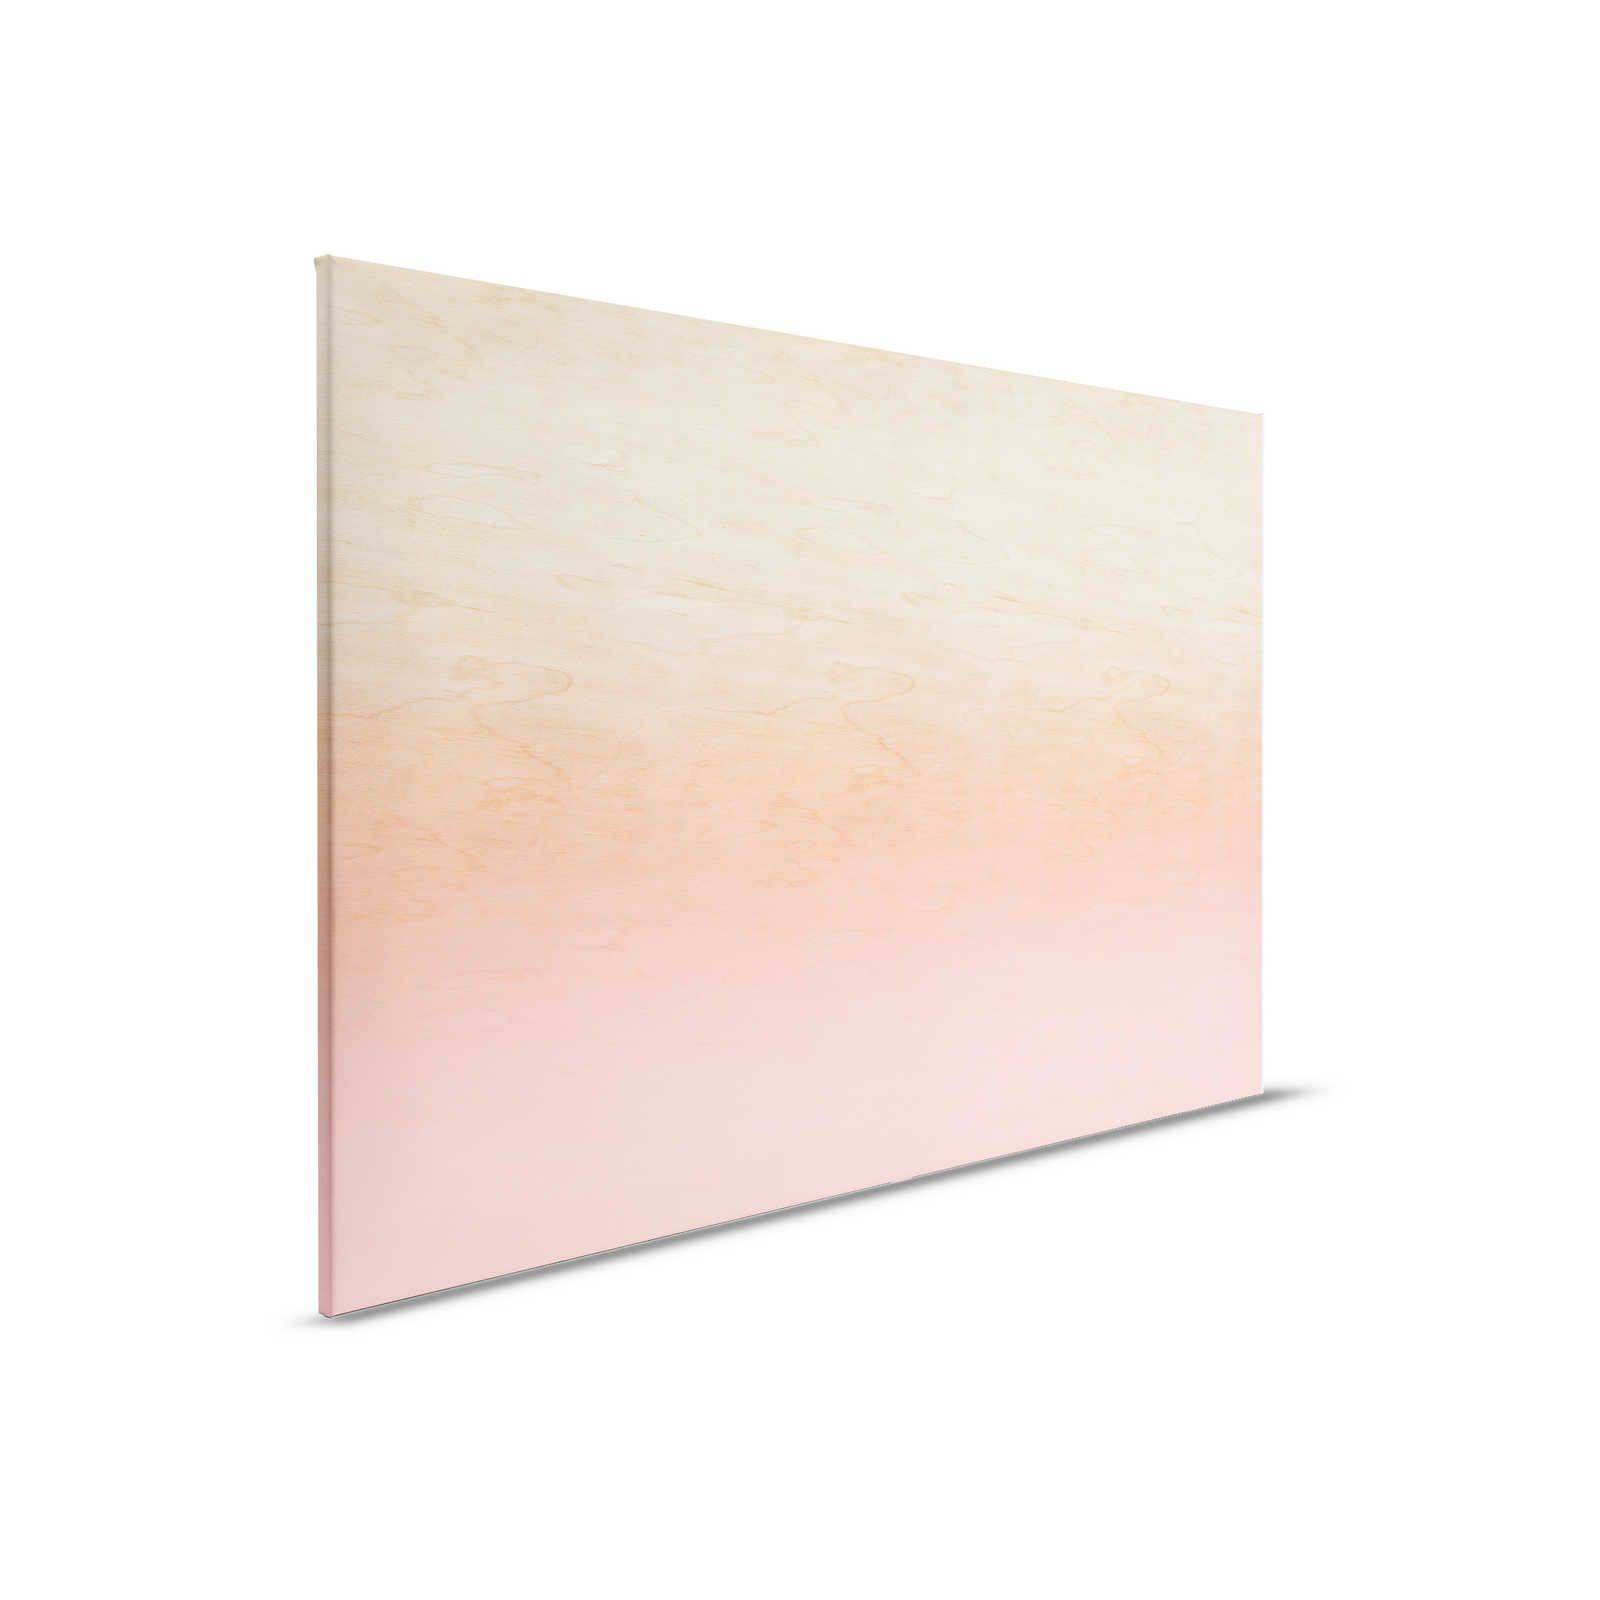         Workshop 2 - Canvas painting Pink Ombre Effect & Wood Grain - 0.90 m x 0.60 m
    